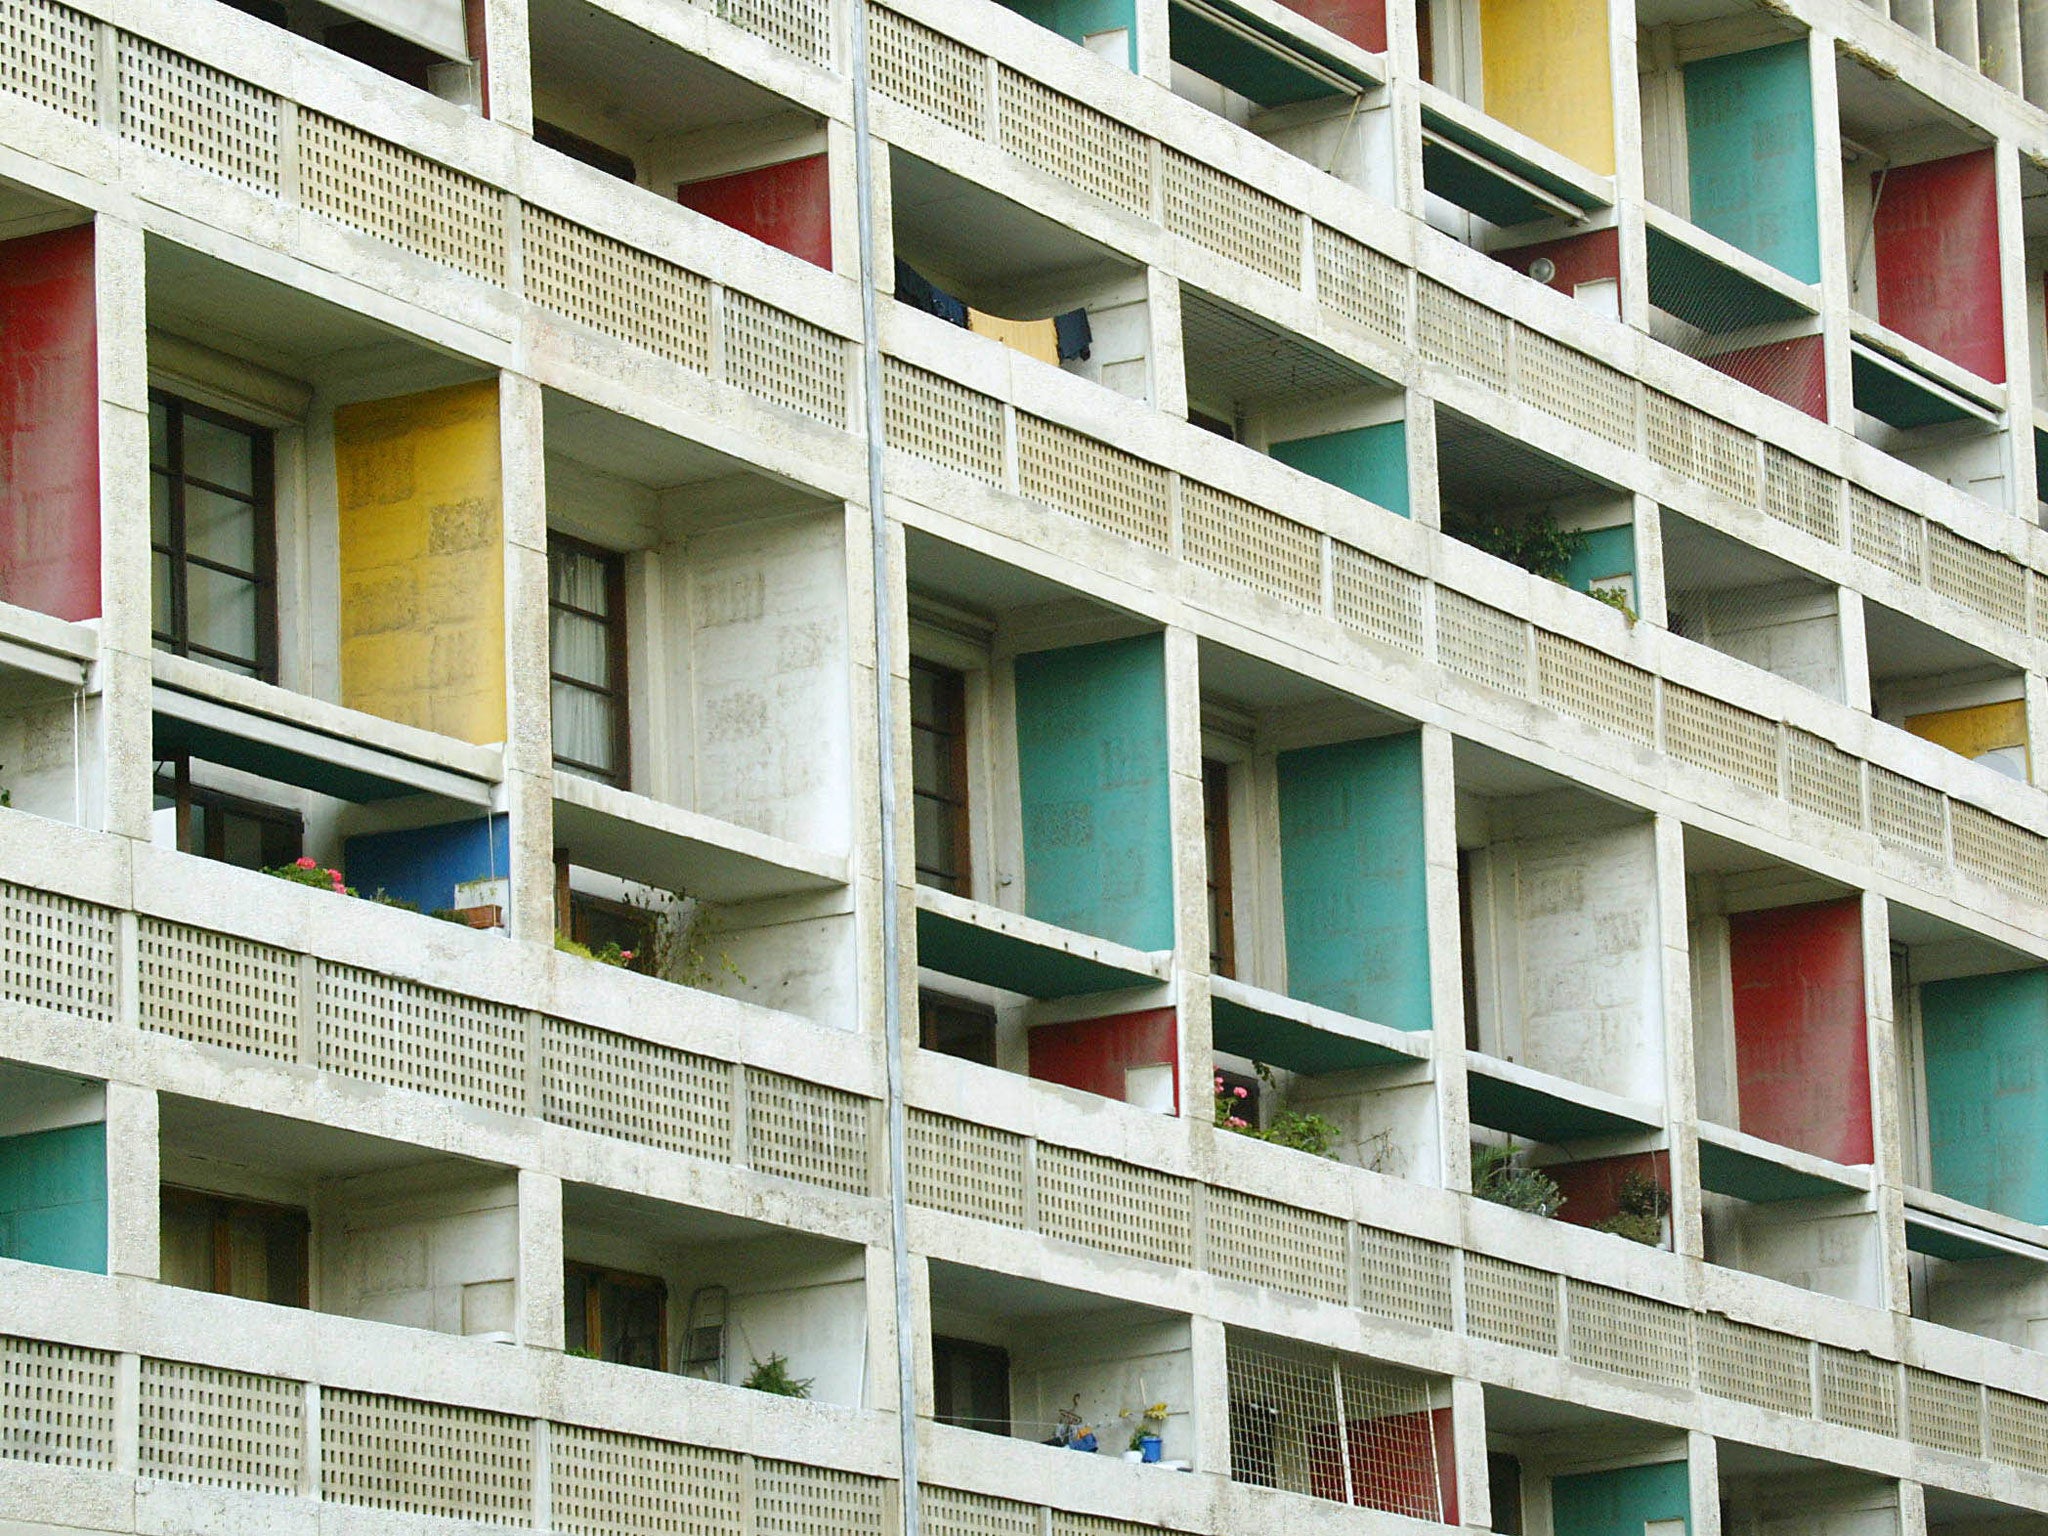 Le Corbusier’s La Cité Radieuse in Marseille tested the writer’s Francophile tendencies